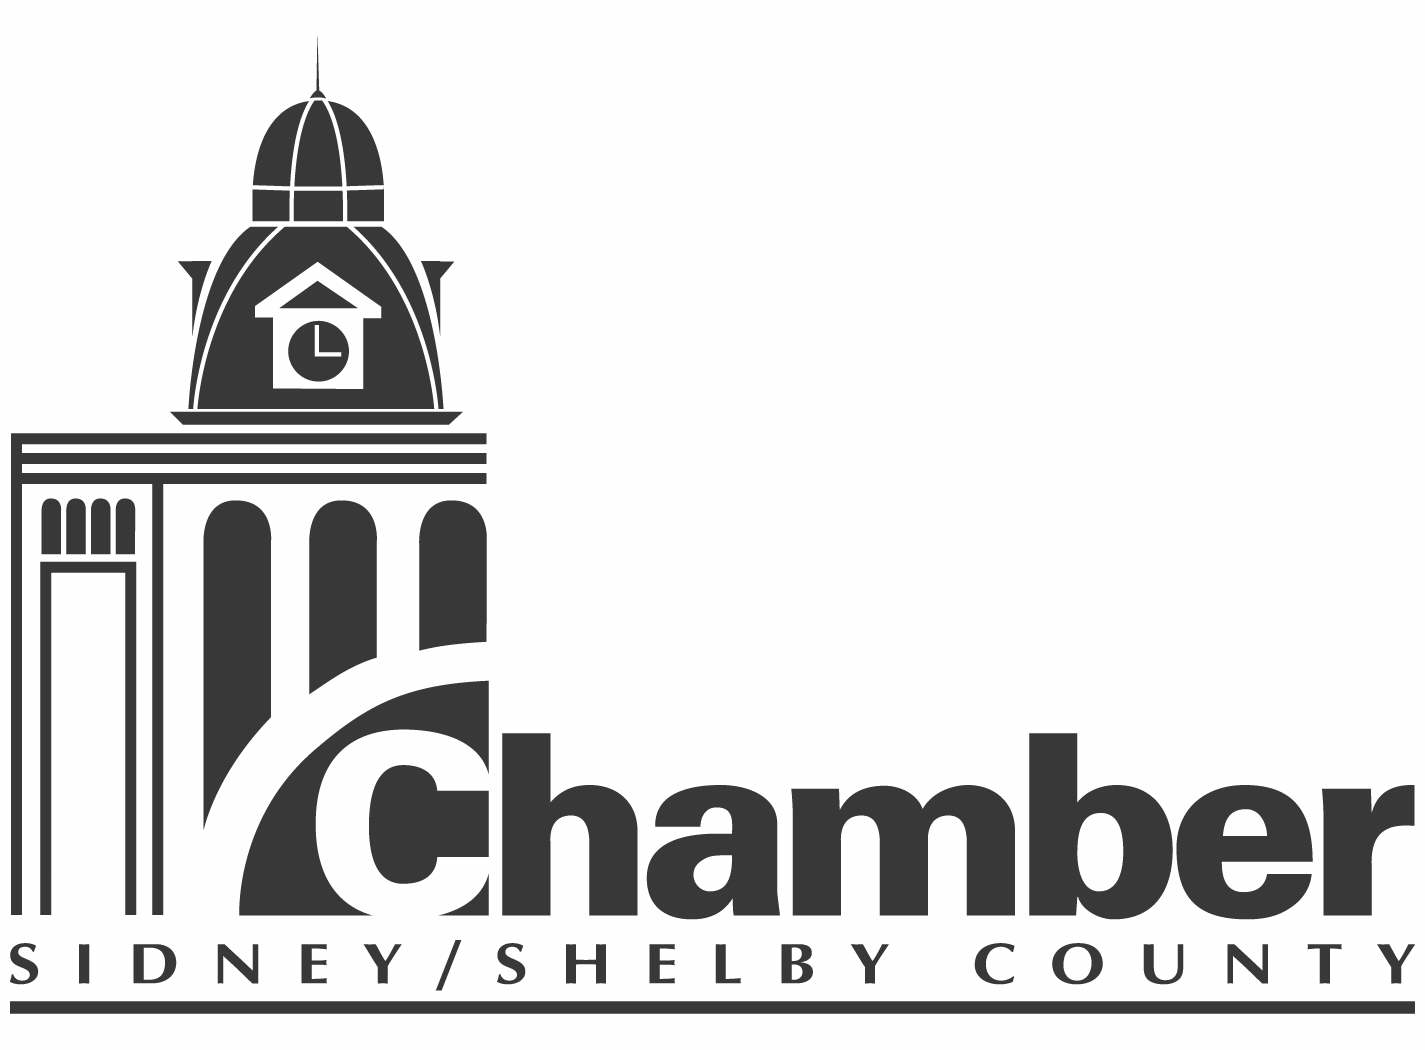 Sidney, Shelby County Chamber Logo